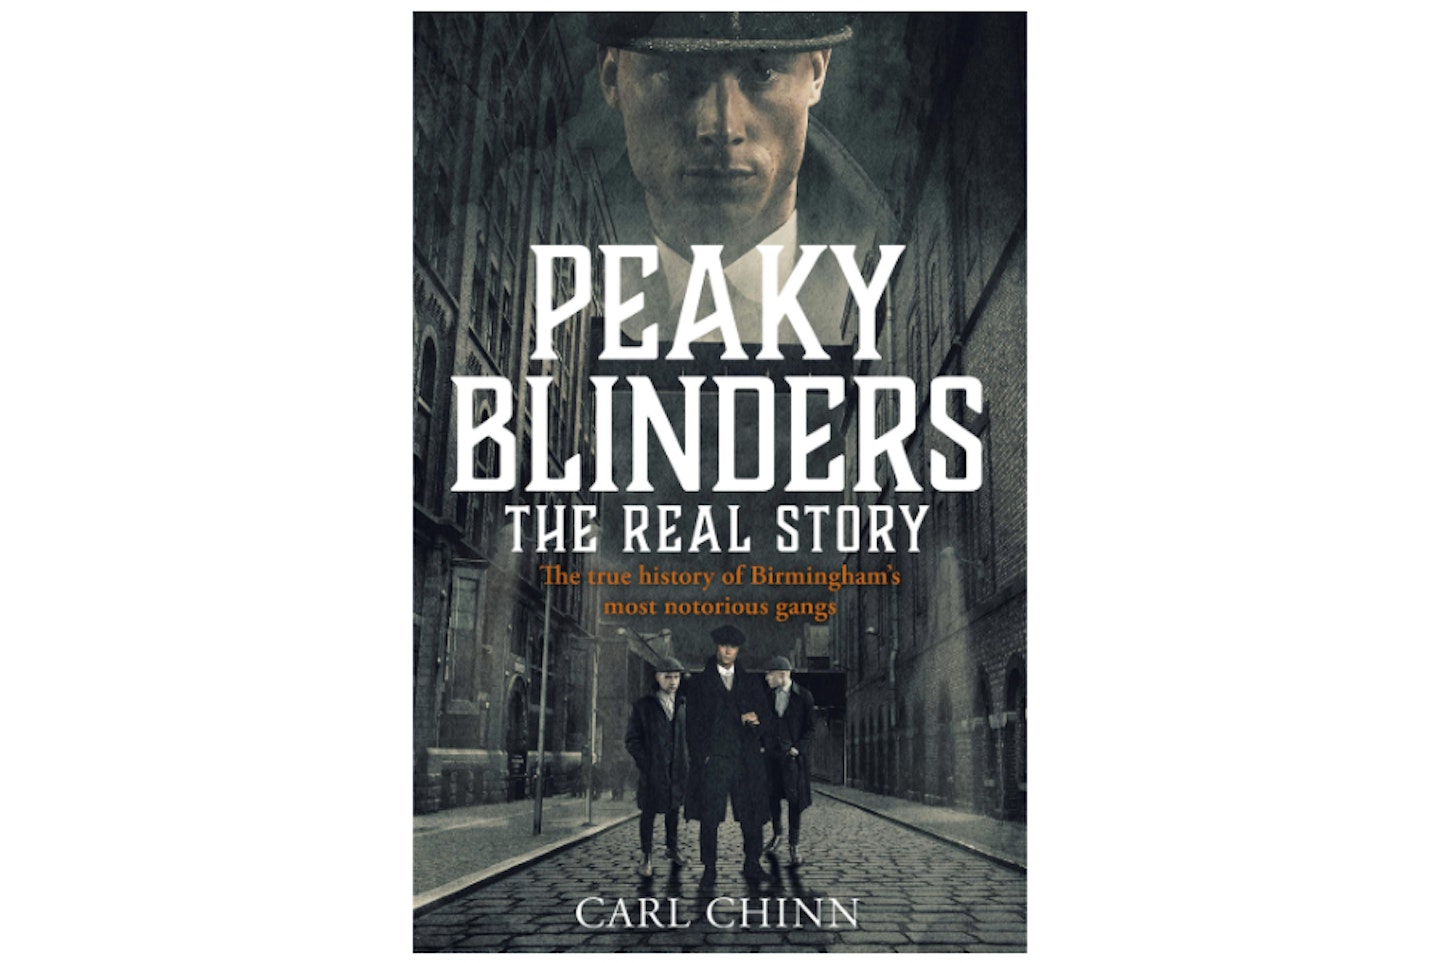 Peaky Blinders: The Real Story – The True History of Birminghamu2019s Most Notorious Gangs